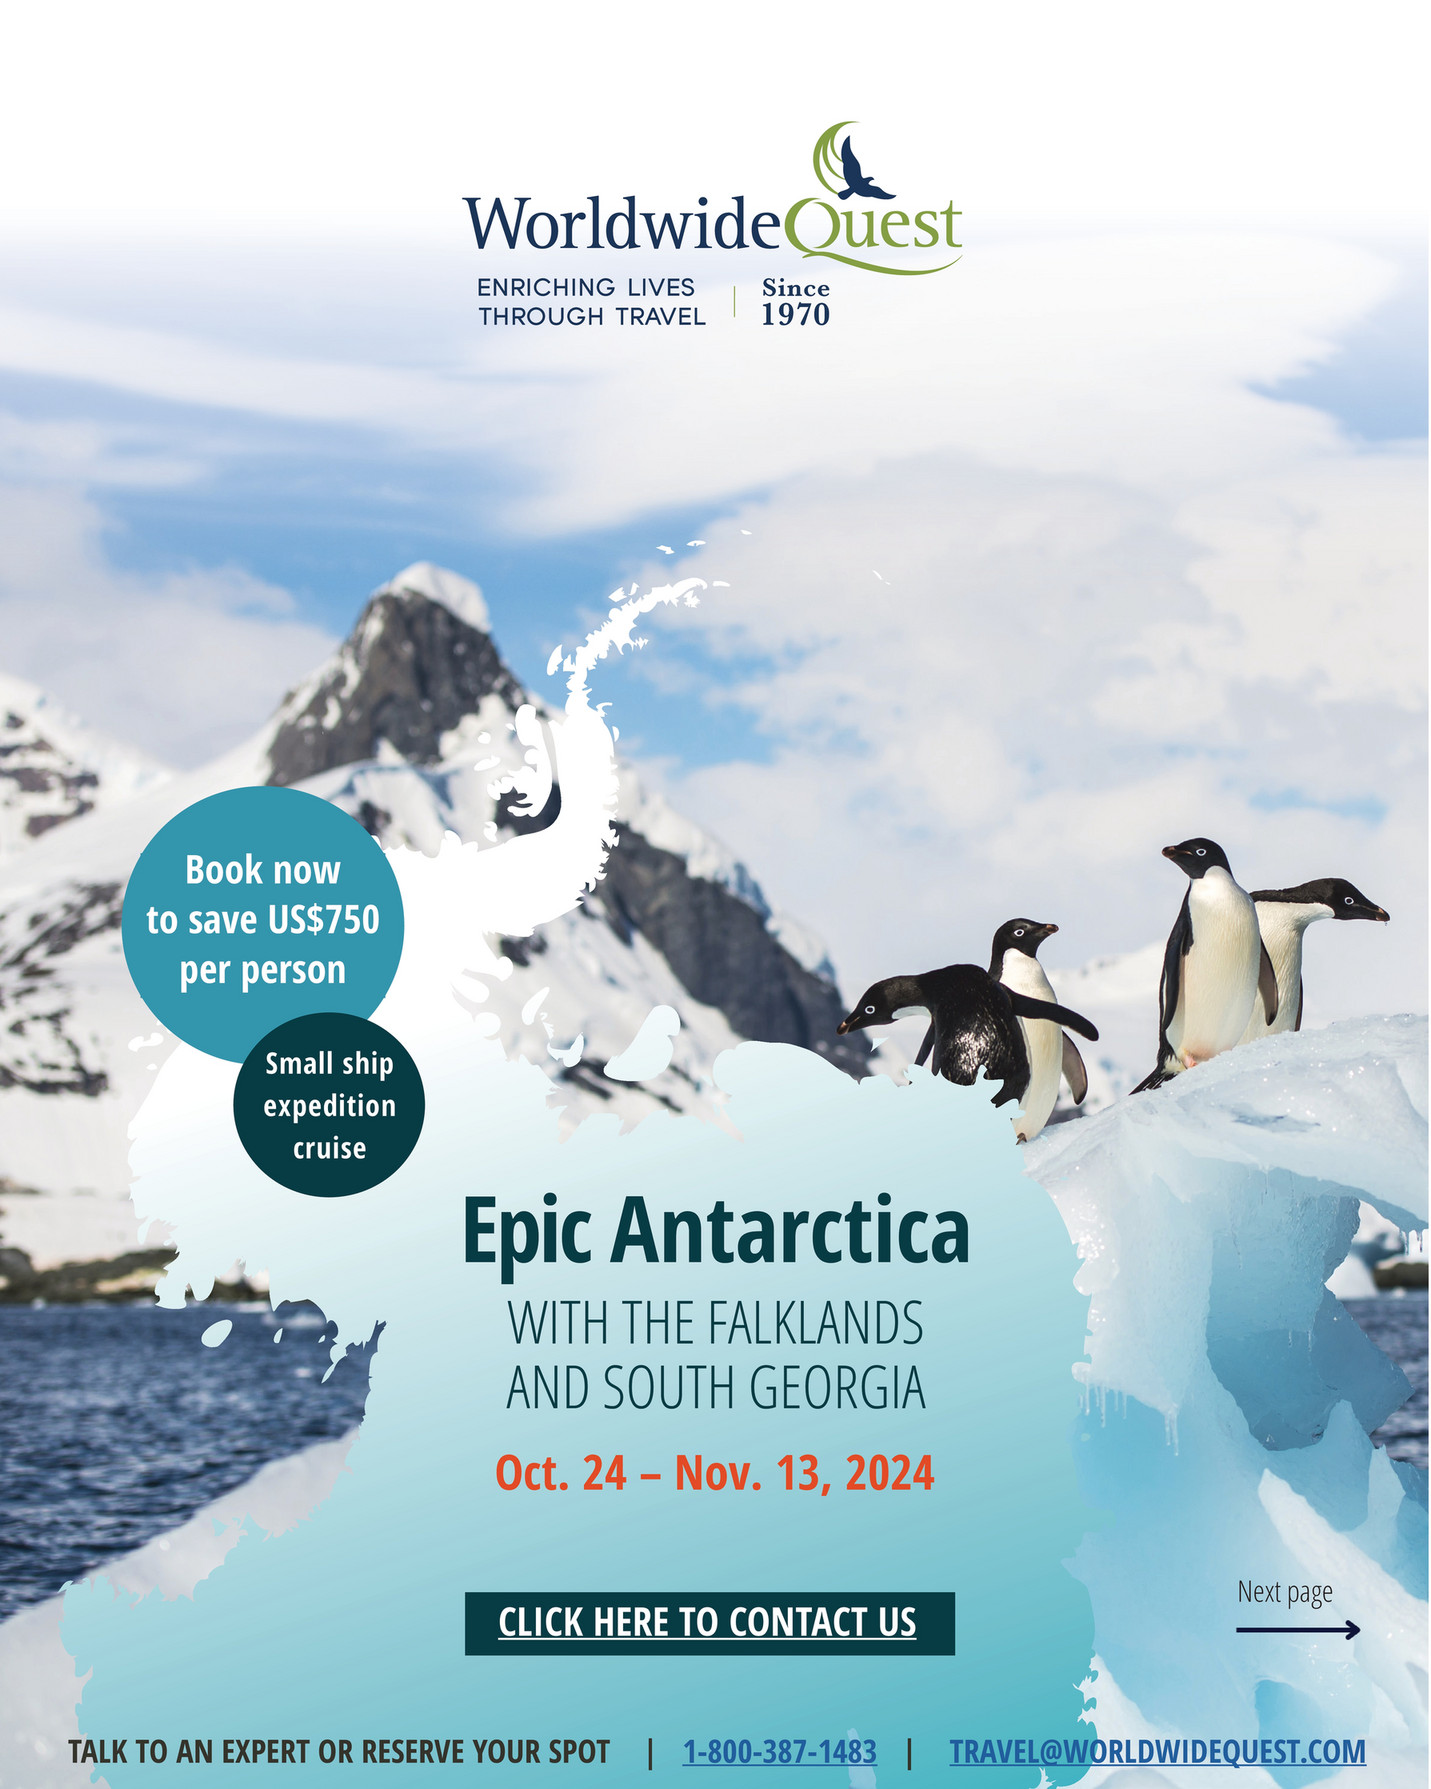 Worldwide Quest Worldwide Quest Epic Antarctica Expedition 2024 6141